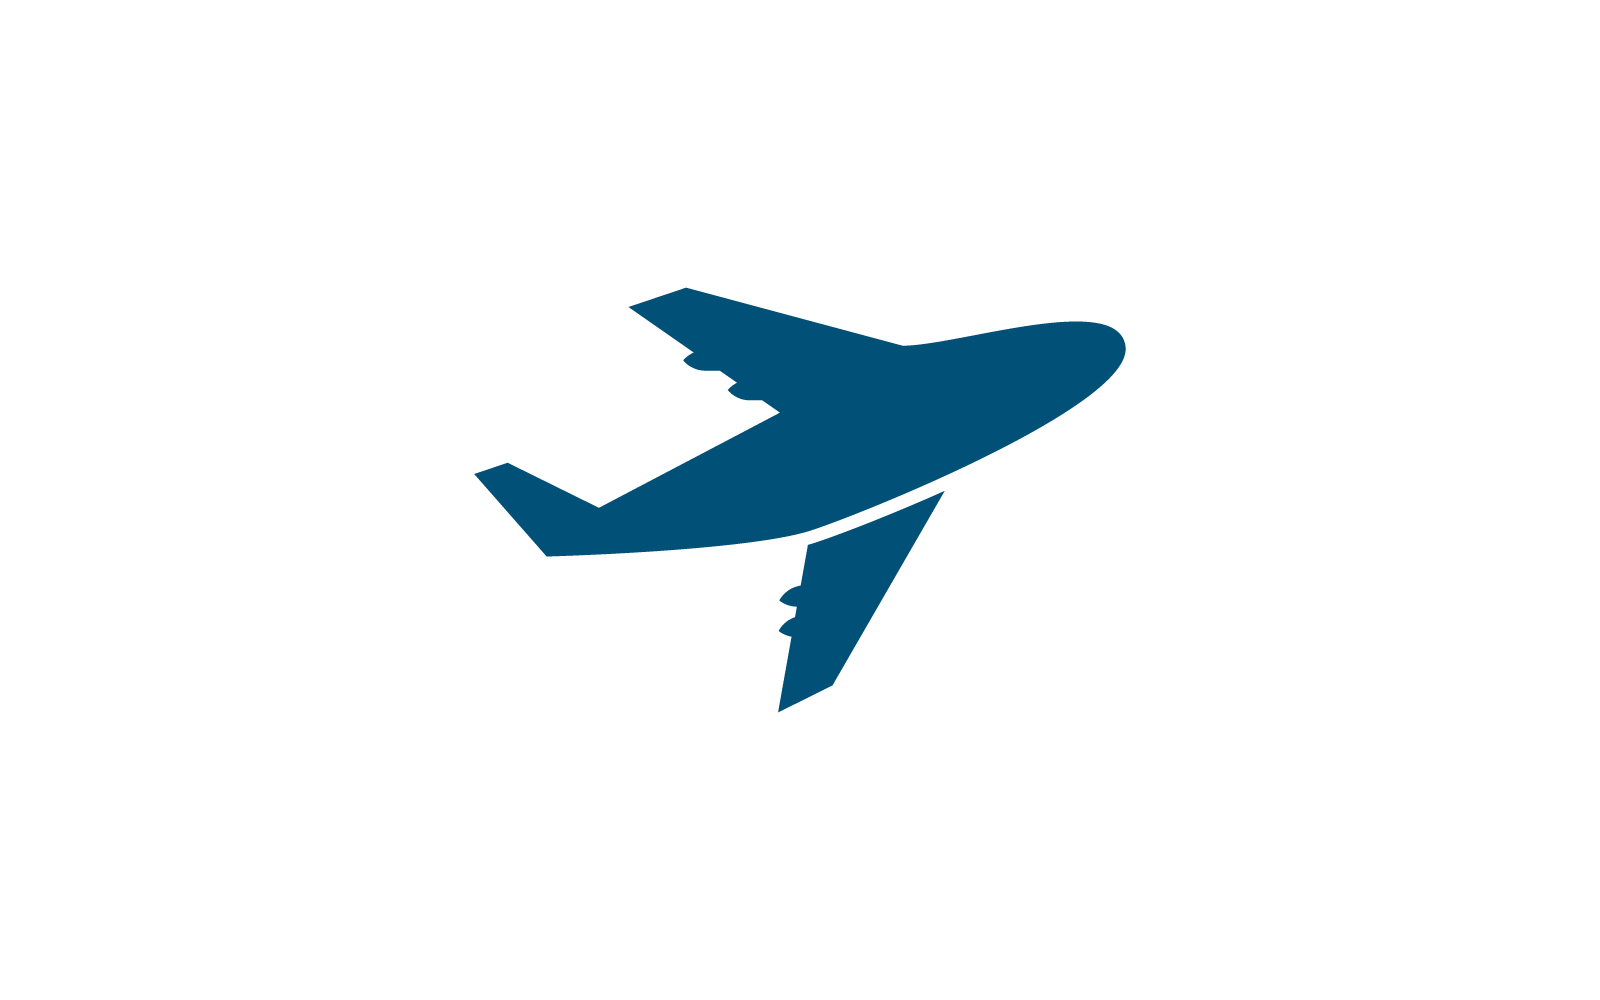 Air Plane illustration logo vector flat design template